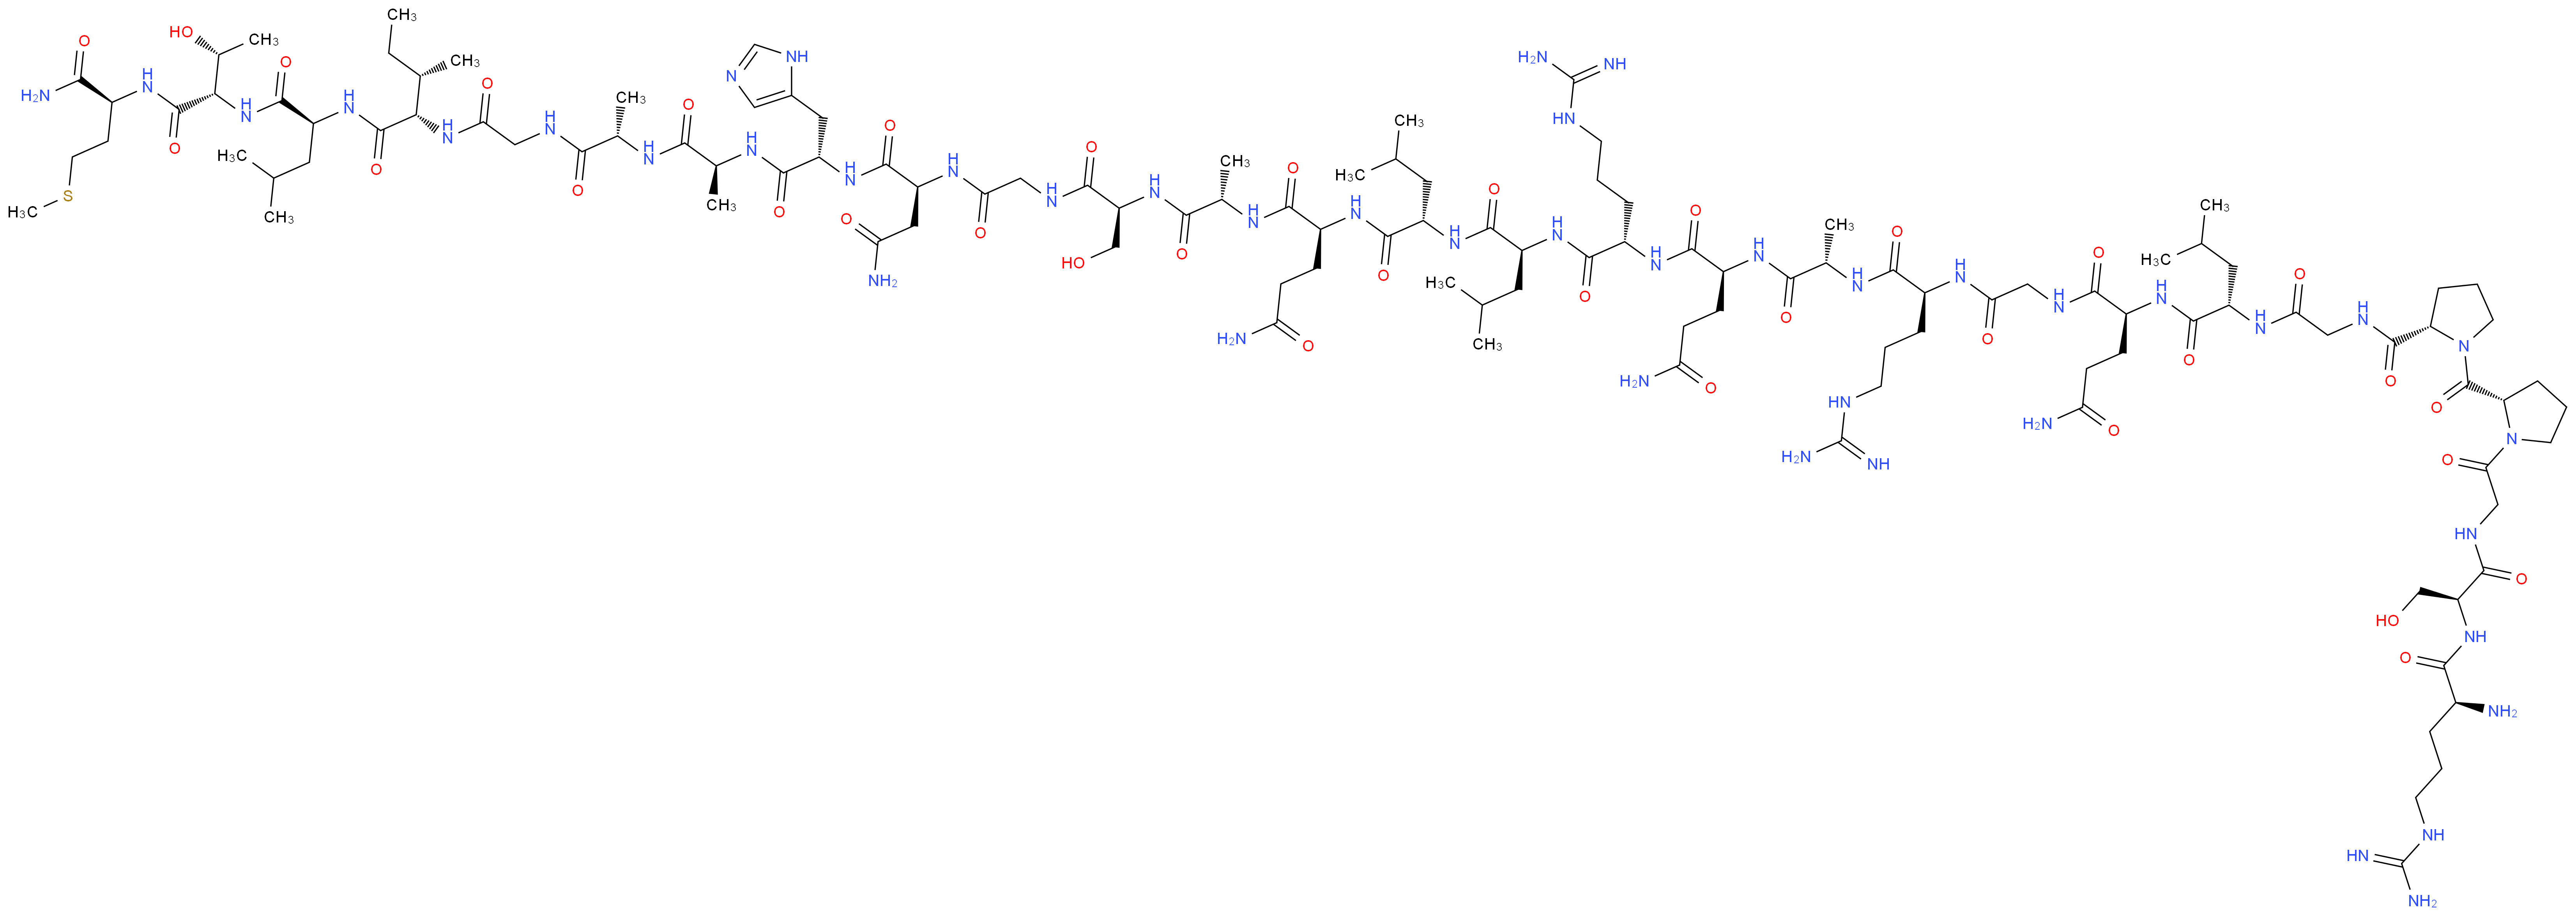 (2S)-2-[(2S)-2-[(2S)-2-[(2S)-2-[(2S)-2-[(2S)-2-[(2S)-2-{2-[(2S)-2-[(2S)-2-(2-{[(2S)-1-[(2S)-1-{2-[(2S)-2-[(2S)-2-amino-5-carbamimidamidopentanamido]-3-hydroxypropanamido]acetyl}pyrrolidine-2-carbonyl]pyrrolidin-2-yl]formamido}acetamido)-4-methylpentanamido]-4-carbamoylbutanamido]acetamido}-5-carbamimidamidopentanamido]propanamido]-4-carbamoylbutanamido]-5-carbamimidamidopentanamido]-4-methylpentanamido]-4-methylpentanamido]-N-[(1S)-1-{[(1S)-1-[({[(1S)-2-carbamoyl-1-{[(1S)-1-{[(1S)-1-{[(1S)-1-[({[(1S,2S)-1-{[(1S)-1-{[(1S,2R)-1-{[(1S)-1-carbamoyl-3-(methylsulfanyl)propyl]carbamoyl}-2-hydroxypropyl]carbamoyl}-3-methylbutyl]carbamoyl}-2-methylbutyl]carbamoyl}methyl)carbamoyl]ethyl]carbamoyl}ethyl]carbamoyl}-2-(1H-imidazol-5-yl)ethyl]carbamoyl}ethyl]carbamoyl}methyl)carbamoyl]-2-hydroxyethyl]carbamoyl}ethyl]pentanediamide_分子结构_CAS_274252-40-3